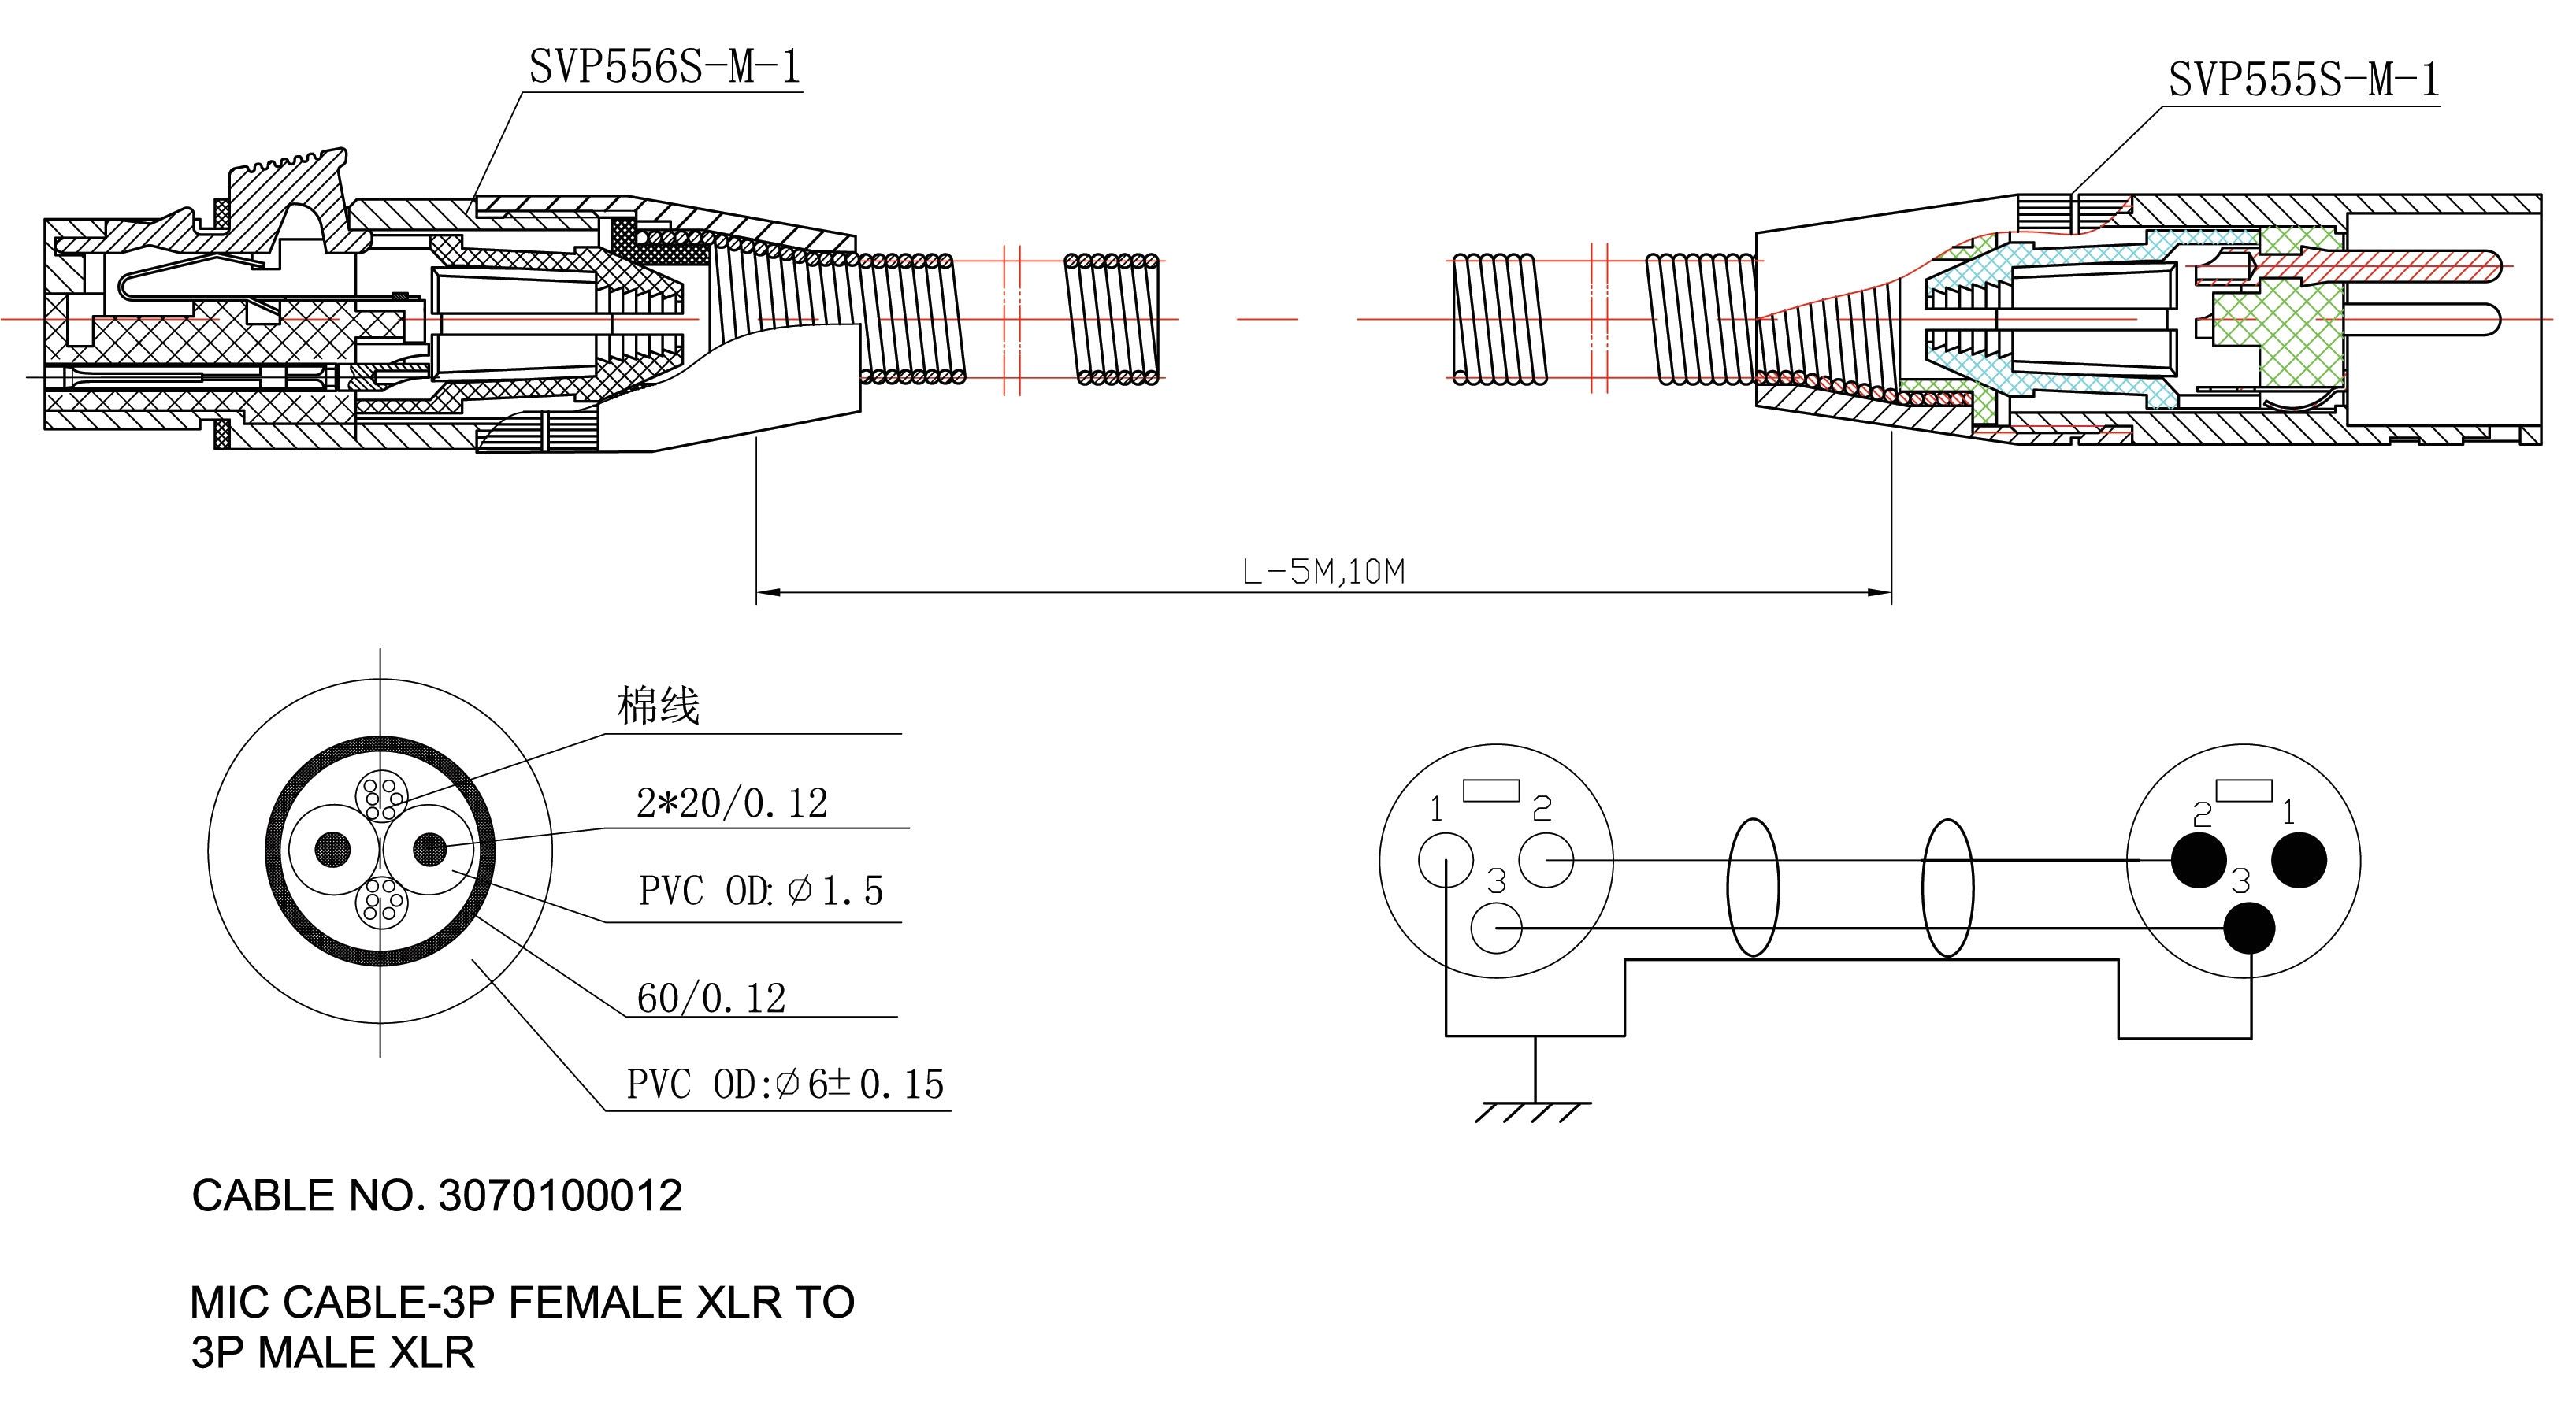 3 way switch wiring diagram multiple lights luxury e cable wiring diagram multiple lights trusted schematic